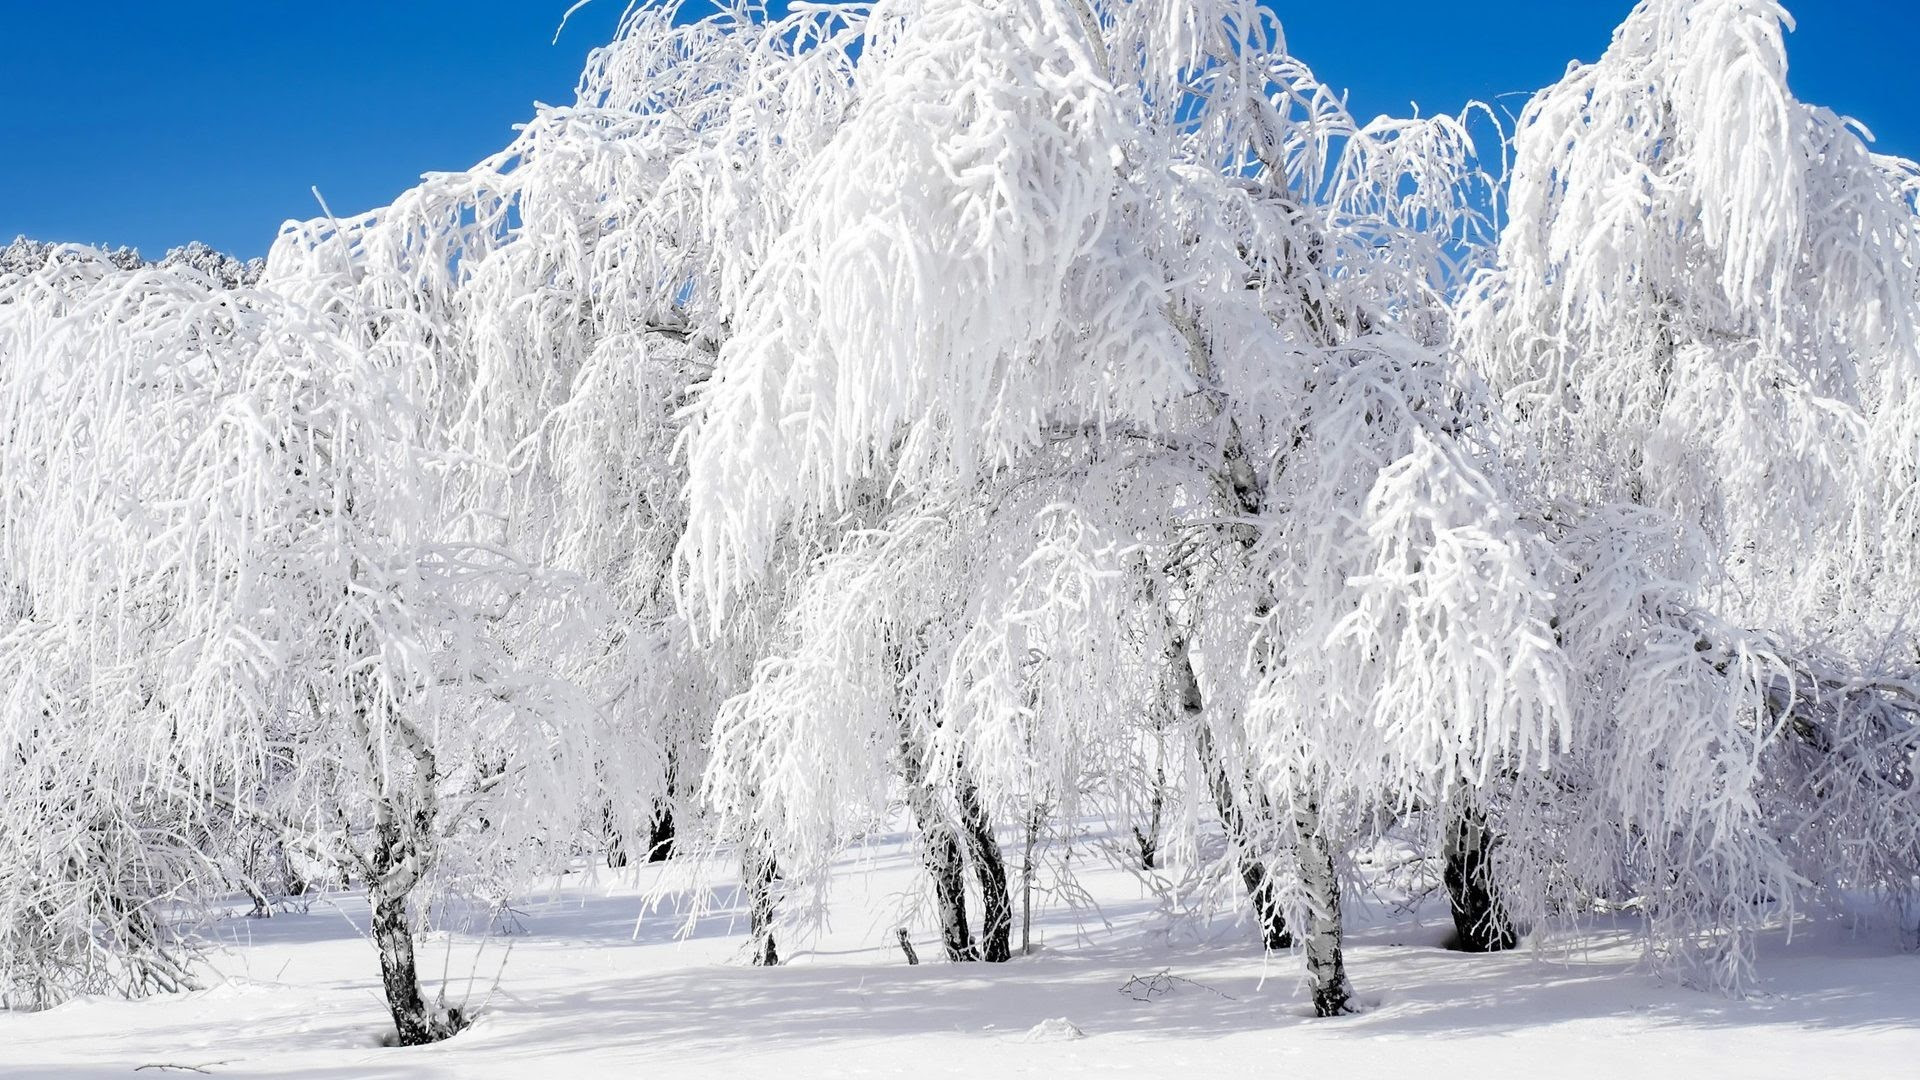 Ipad Wallpaper Winter Scenes Free - Nature Wallpaper